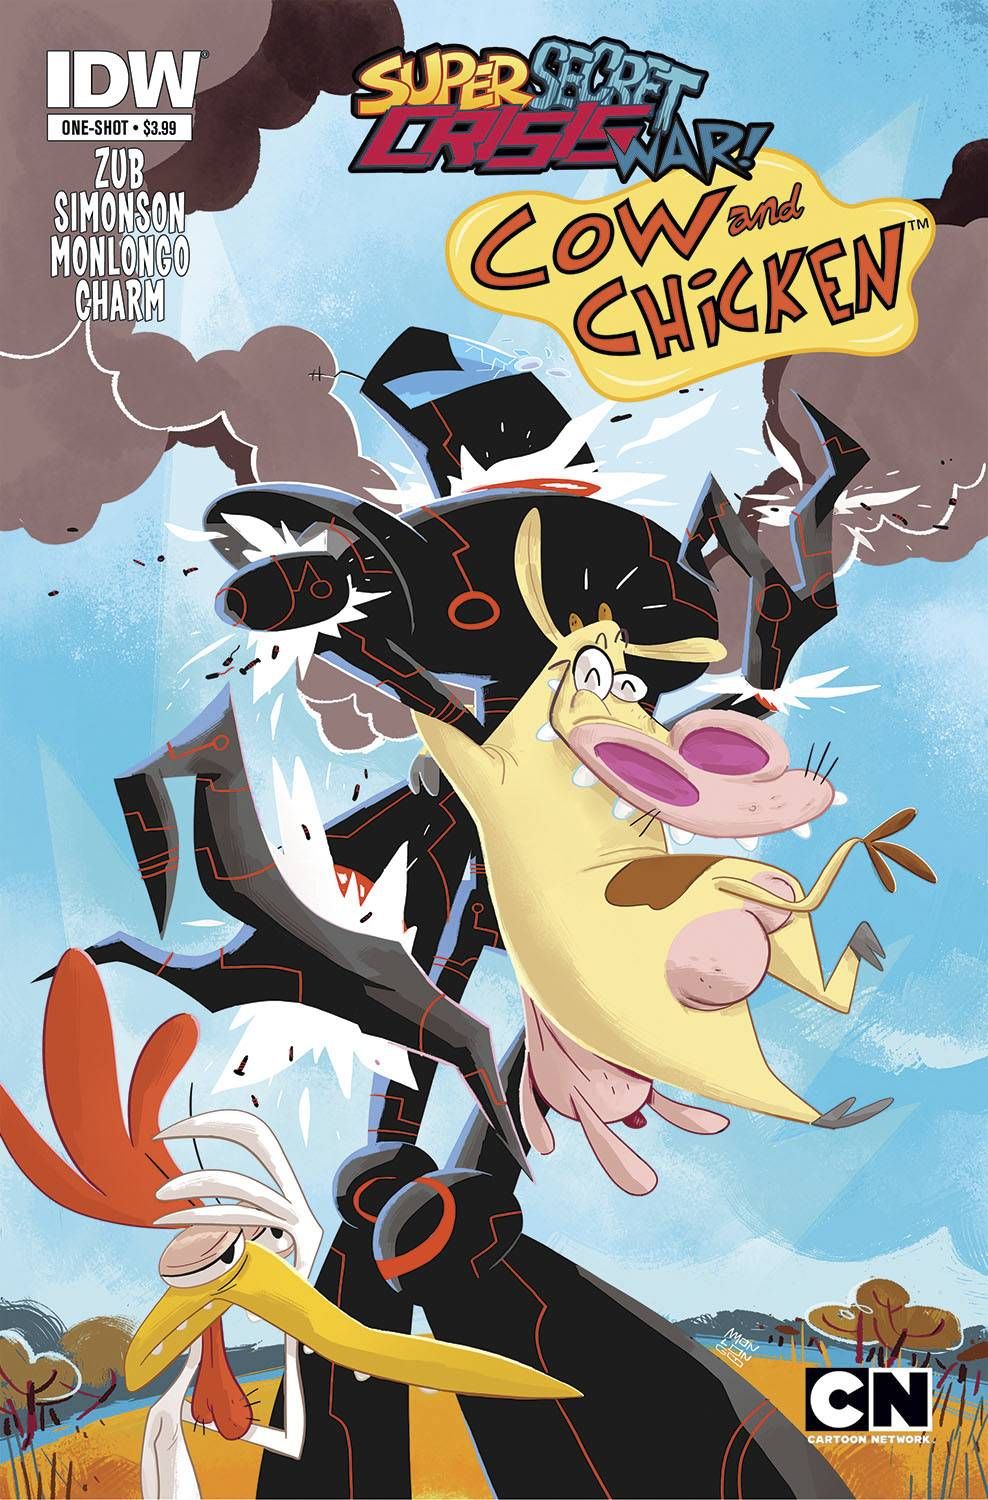 Super Secret Crisis War Cow &amp; Chicken #1 Comic